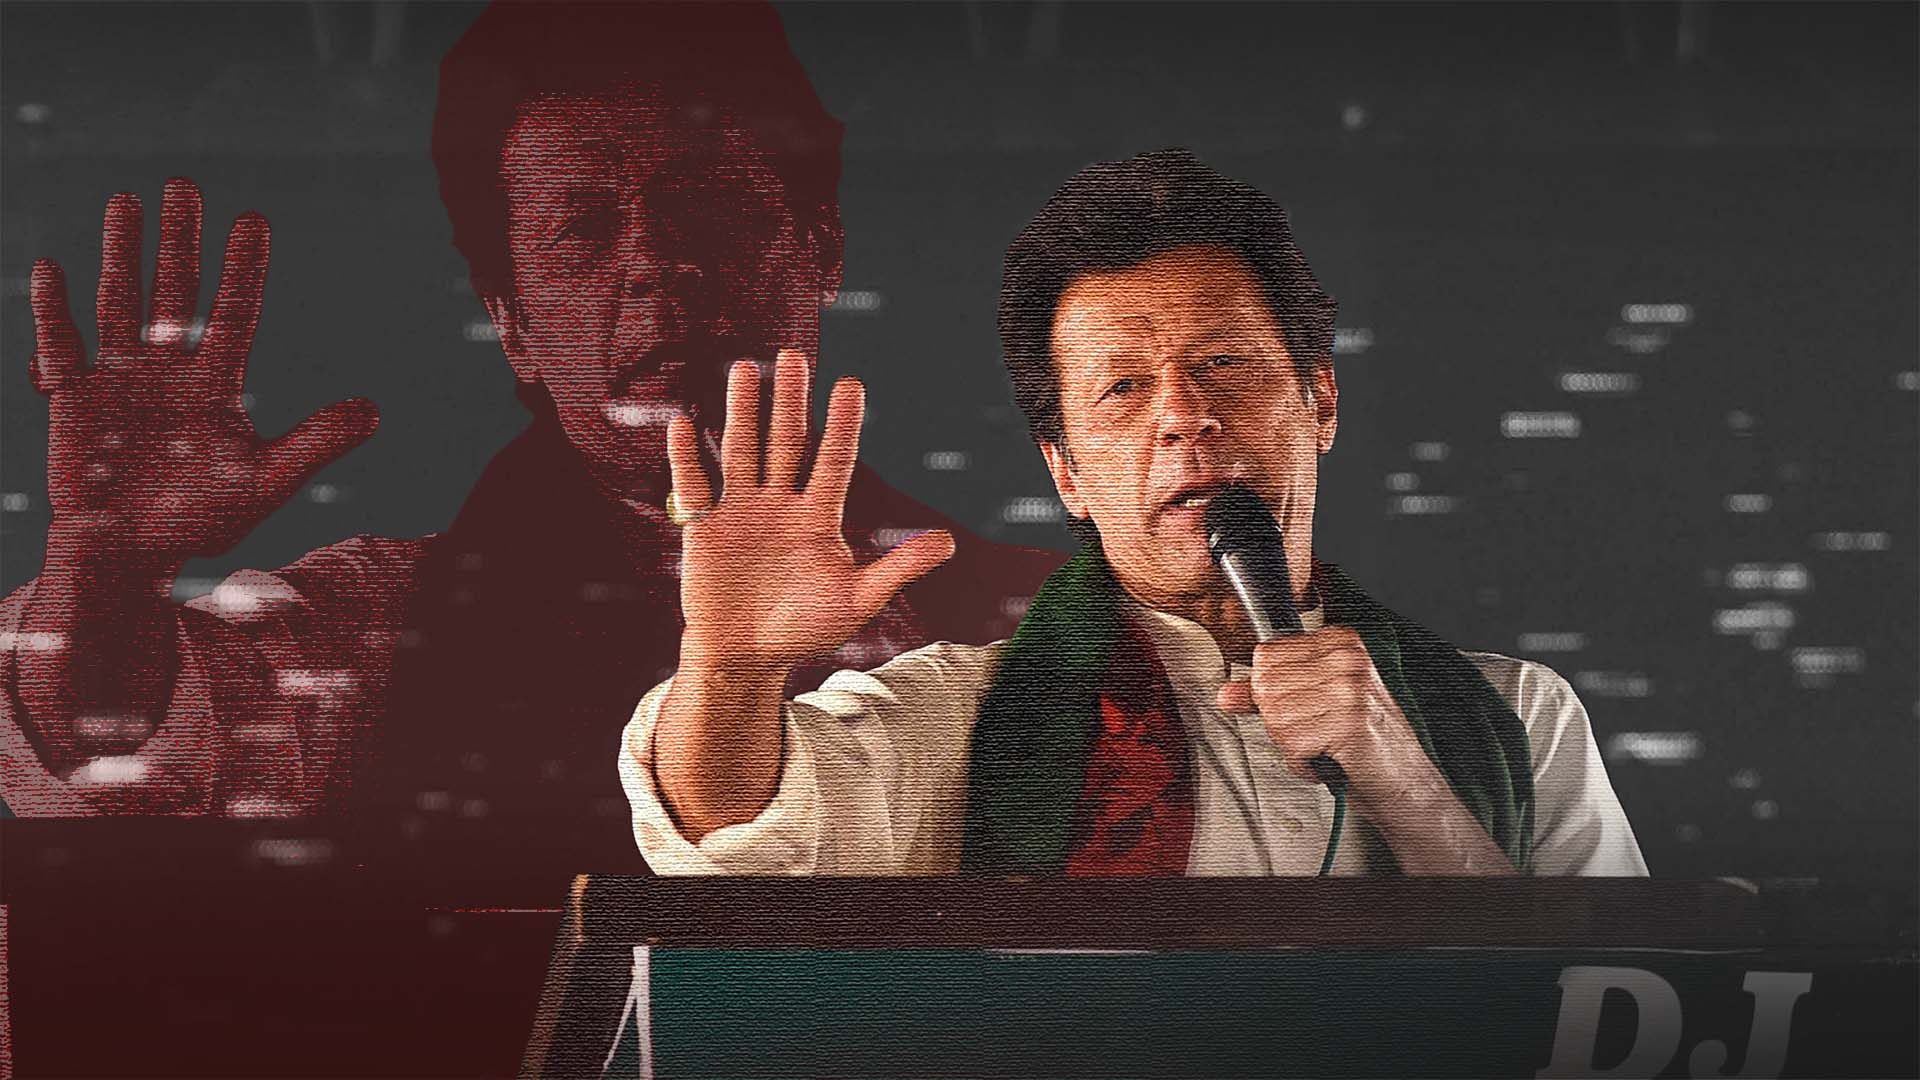 Imran Khan at a rally in 2016